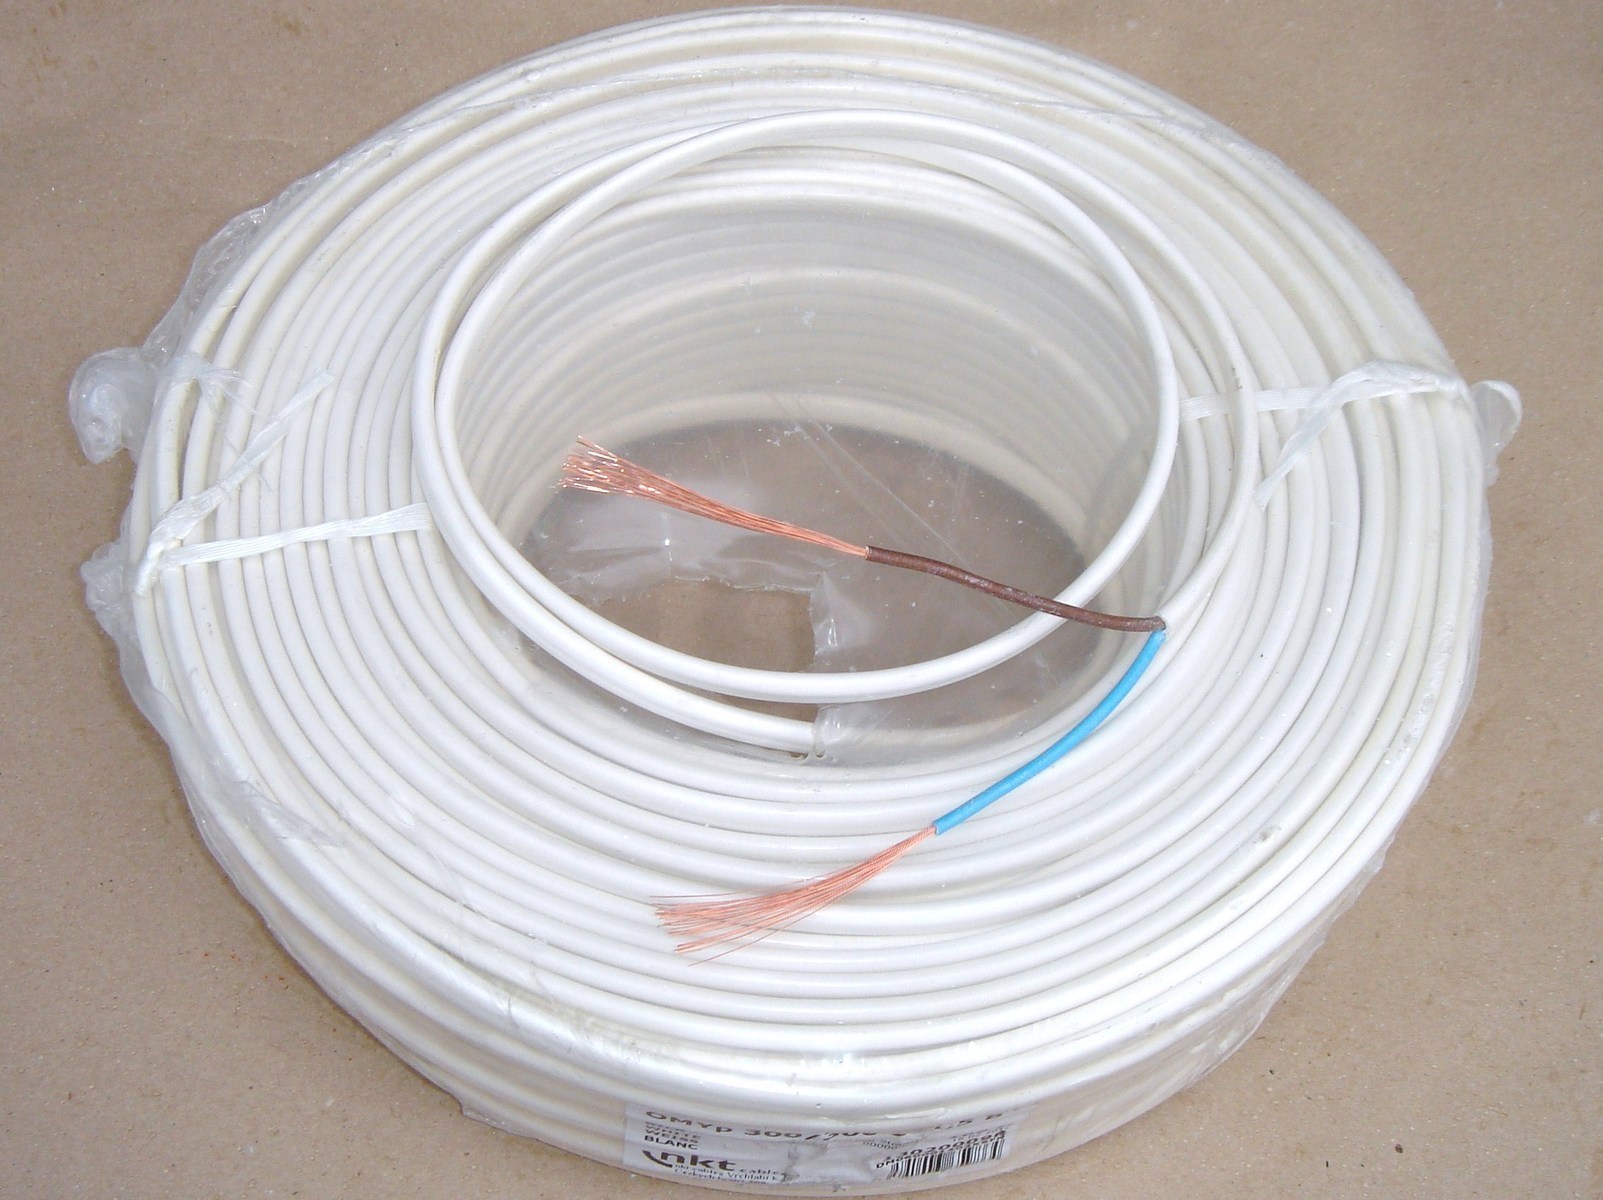 Медный кабель 2x1,5мм² - 0,25 €/м, медные кабели 2x1,5мм², 2x1,5мм, 2x1 .